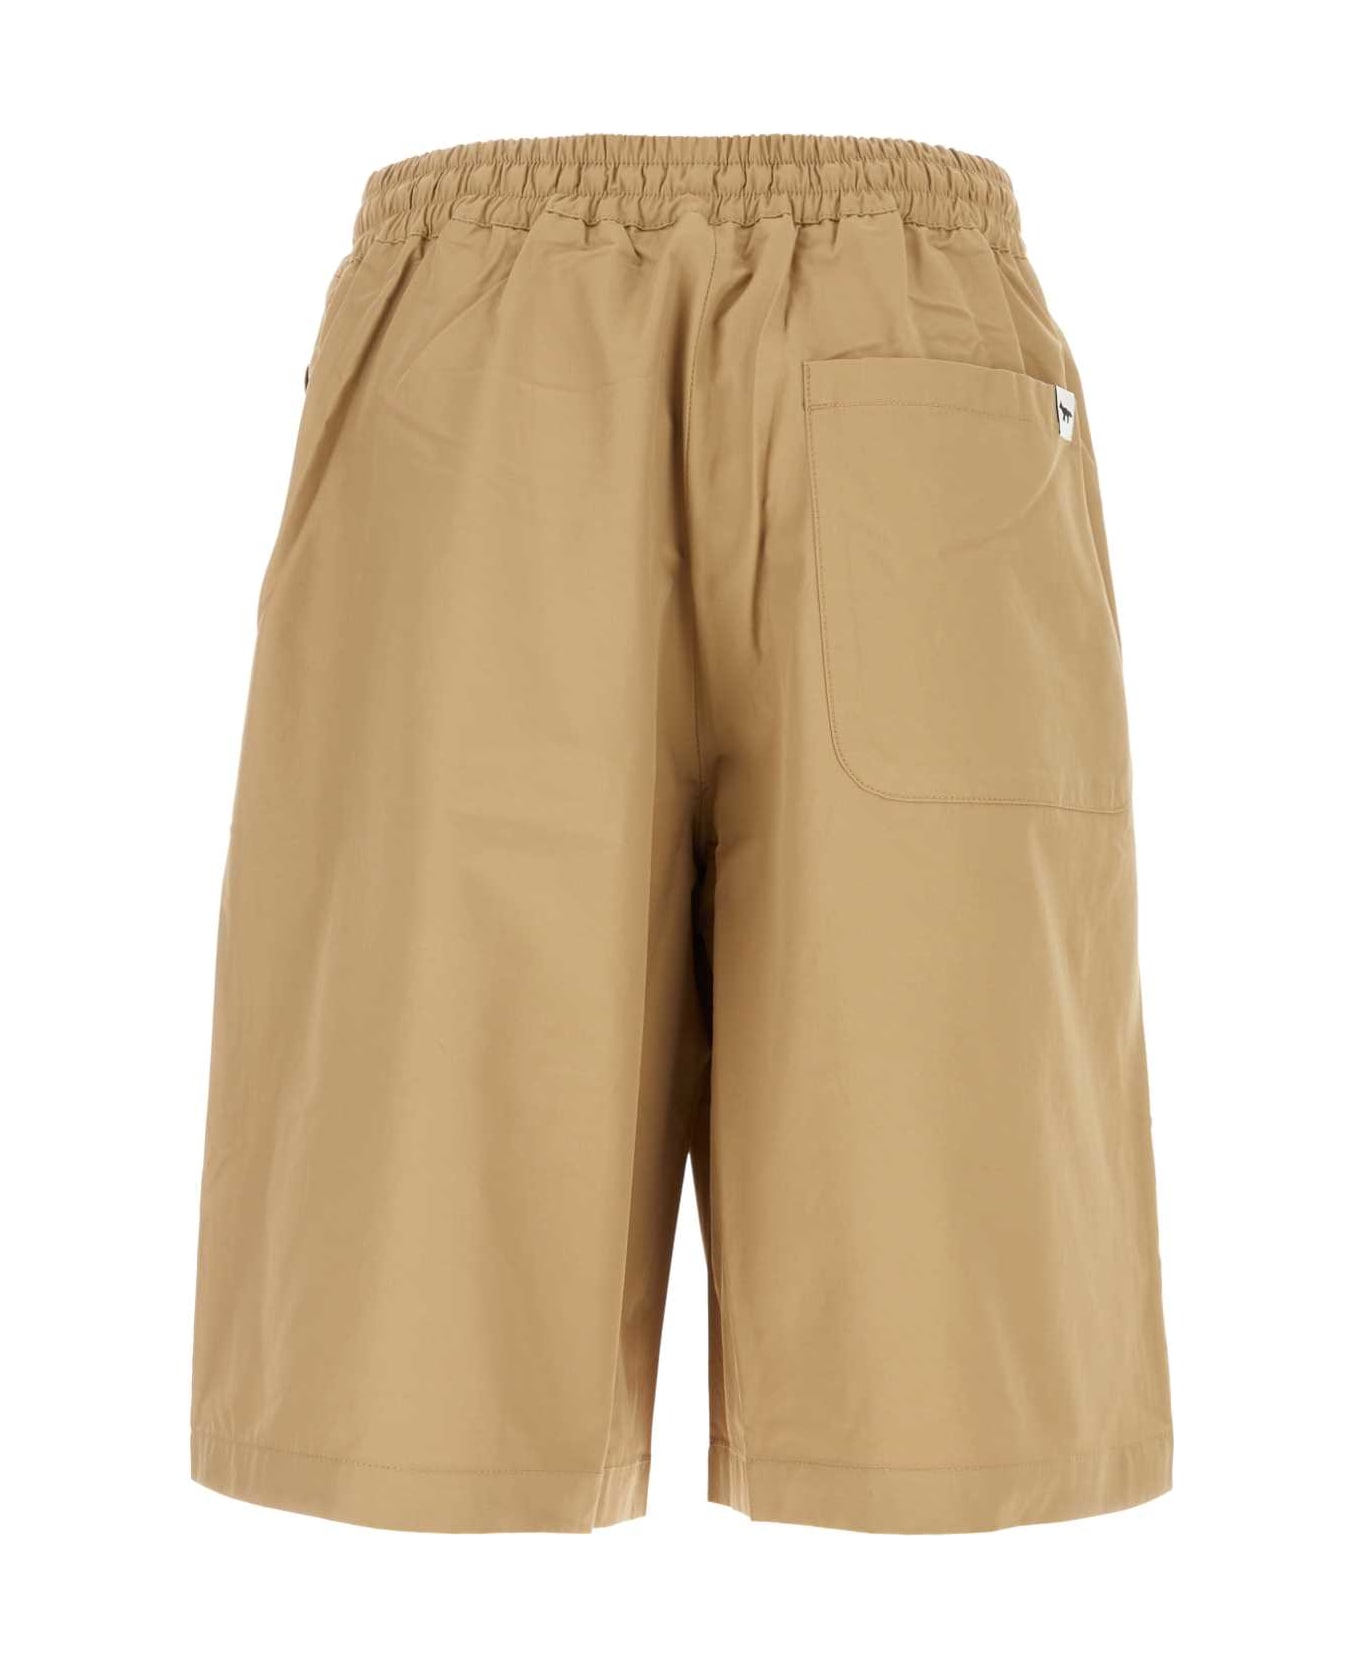 Maison Kitsuné Camel Cotton Blend Bermuda Shorts - P220